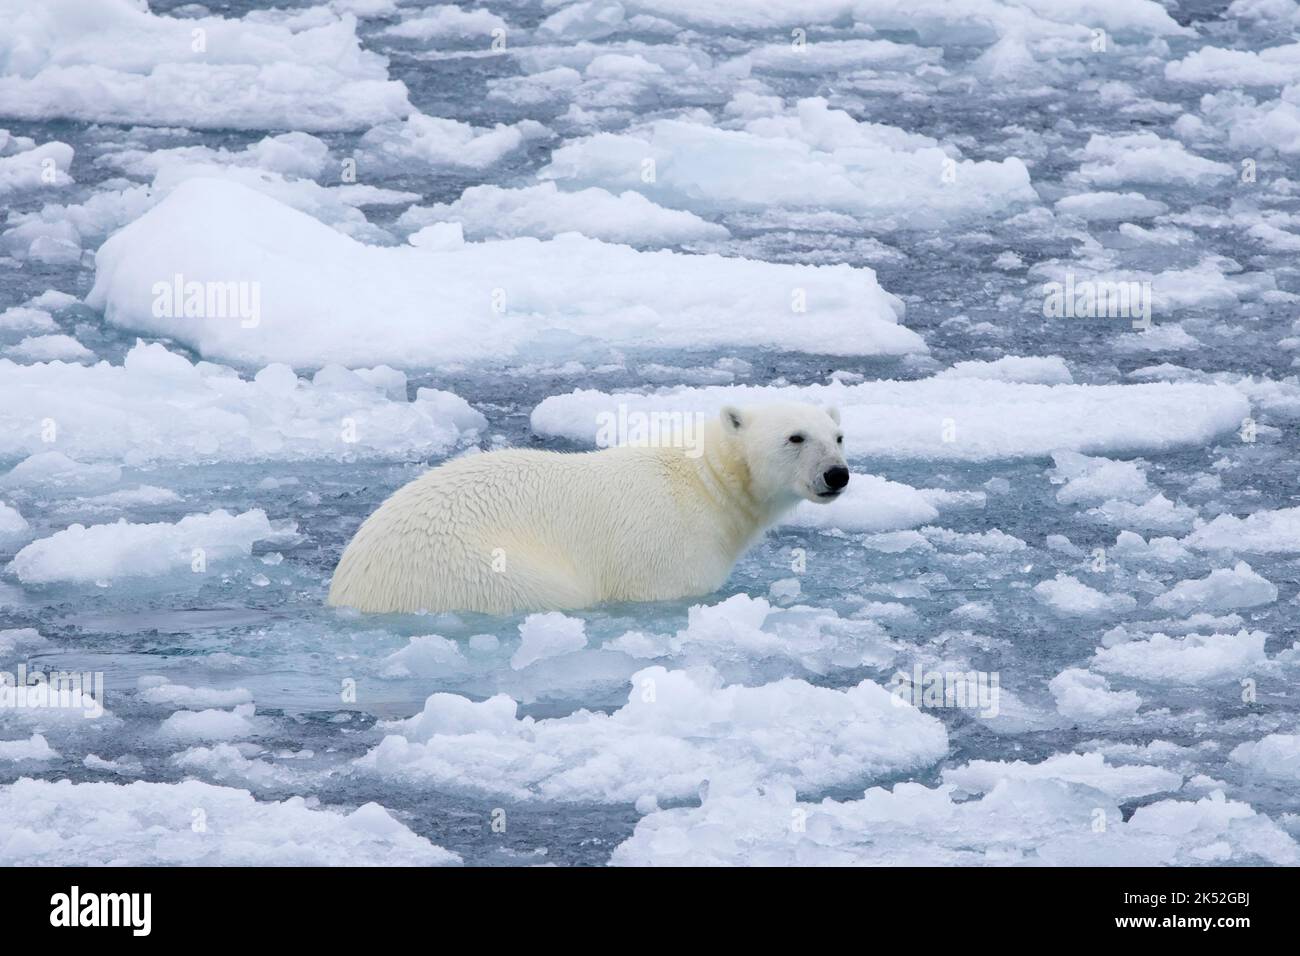 Lone polar bear (Ursus maritimus) in sea water among drift ice / ice floe in the Arctic Ocean along the Svalbard coast, Spitsbergen, Norway Stock Photo